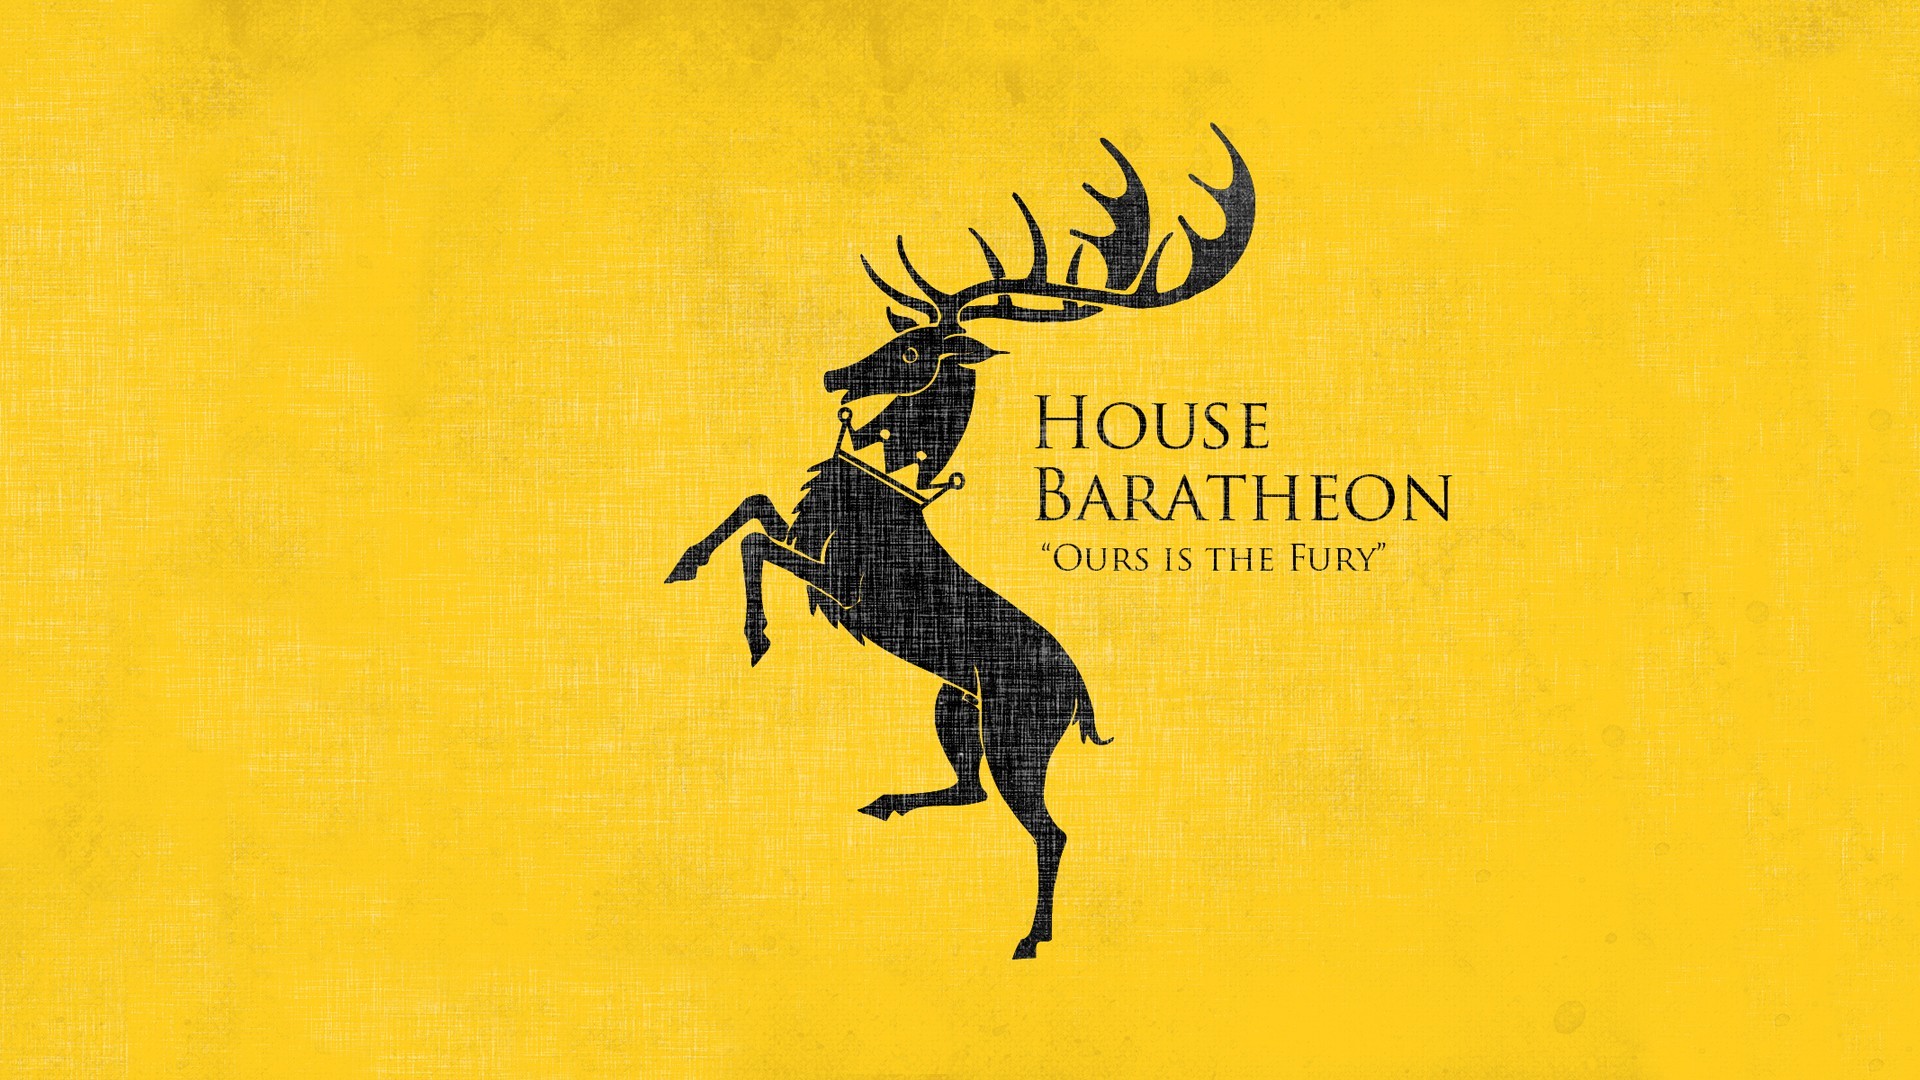 Game Of Thrones, House Baratheon, Sigils, Yellow Background Wallpaper